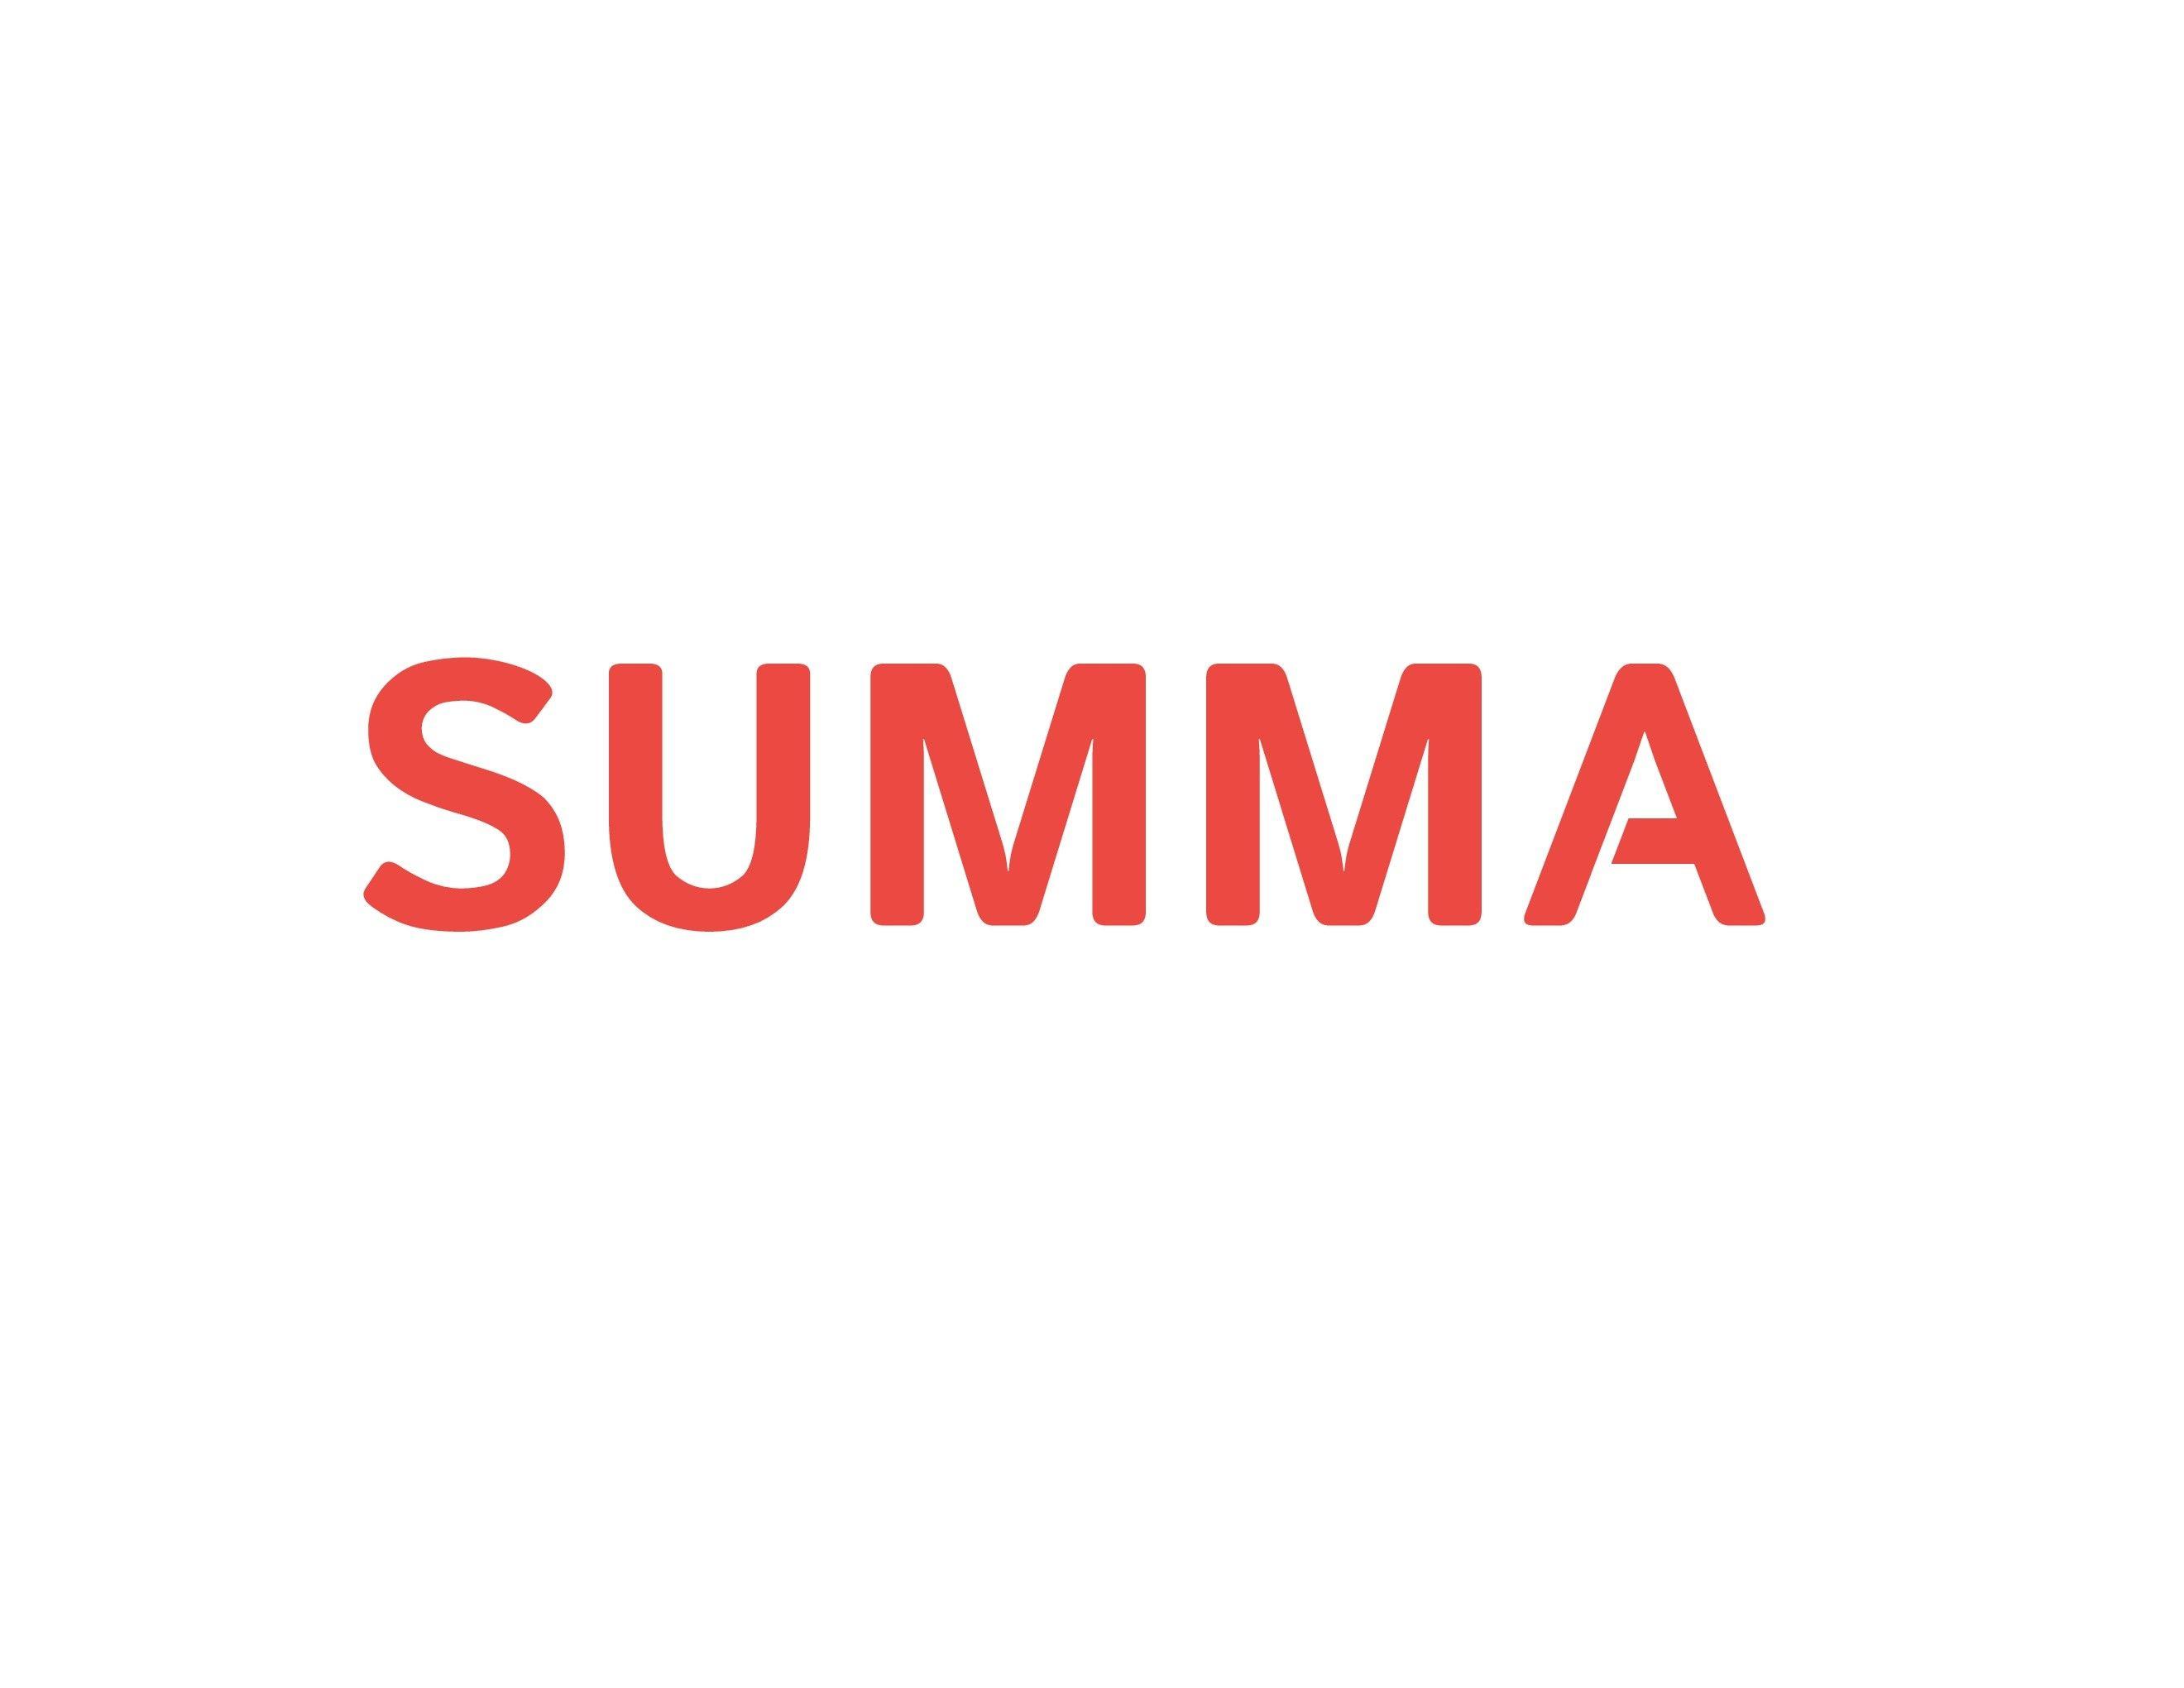 Summa Logo - Summa | LinkedIn